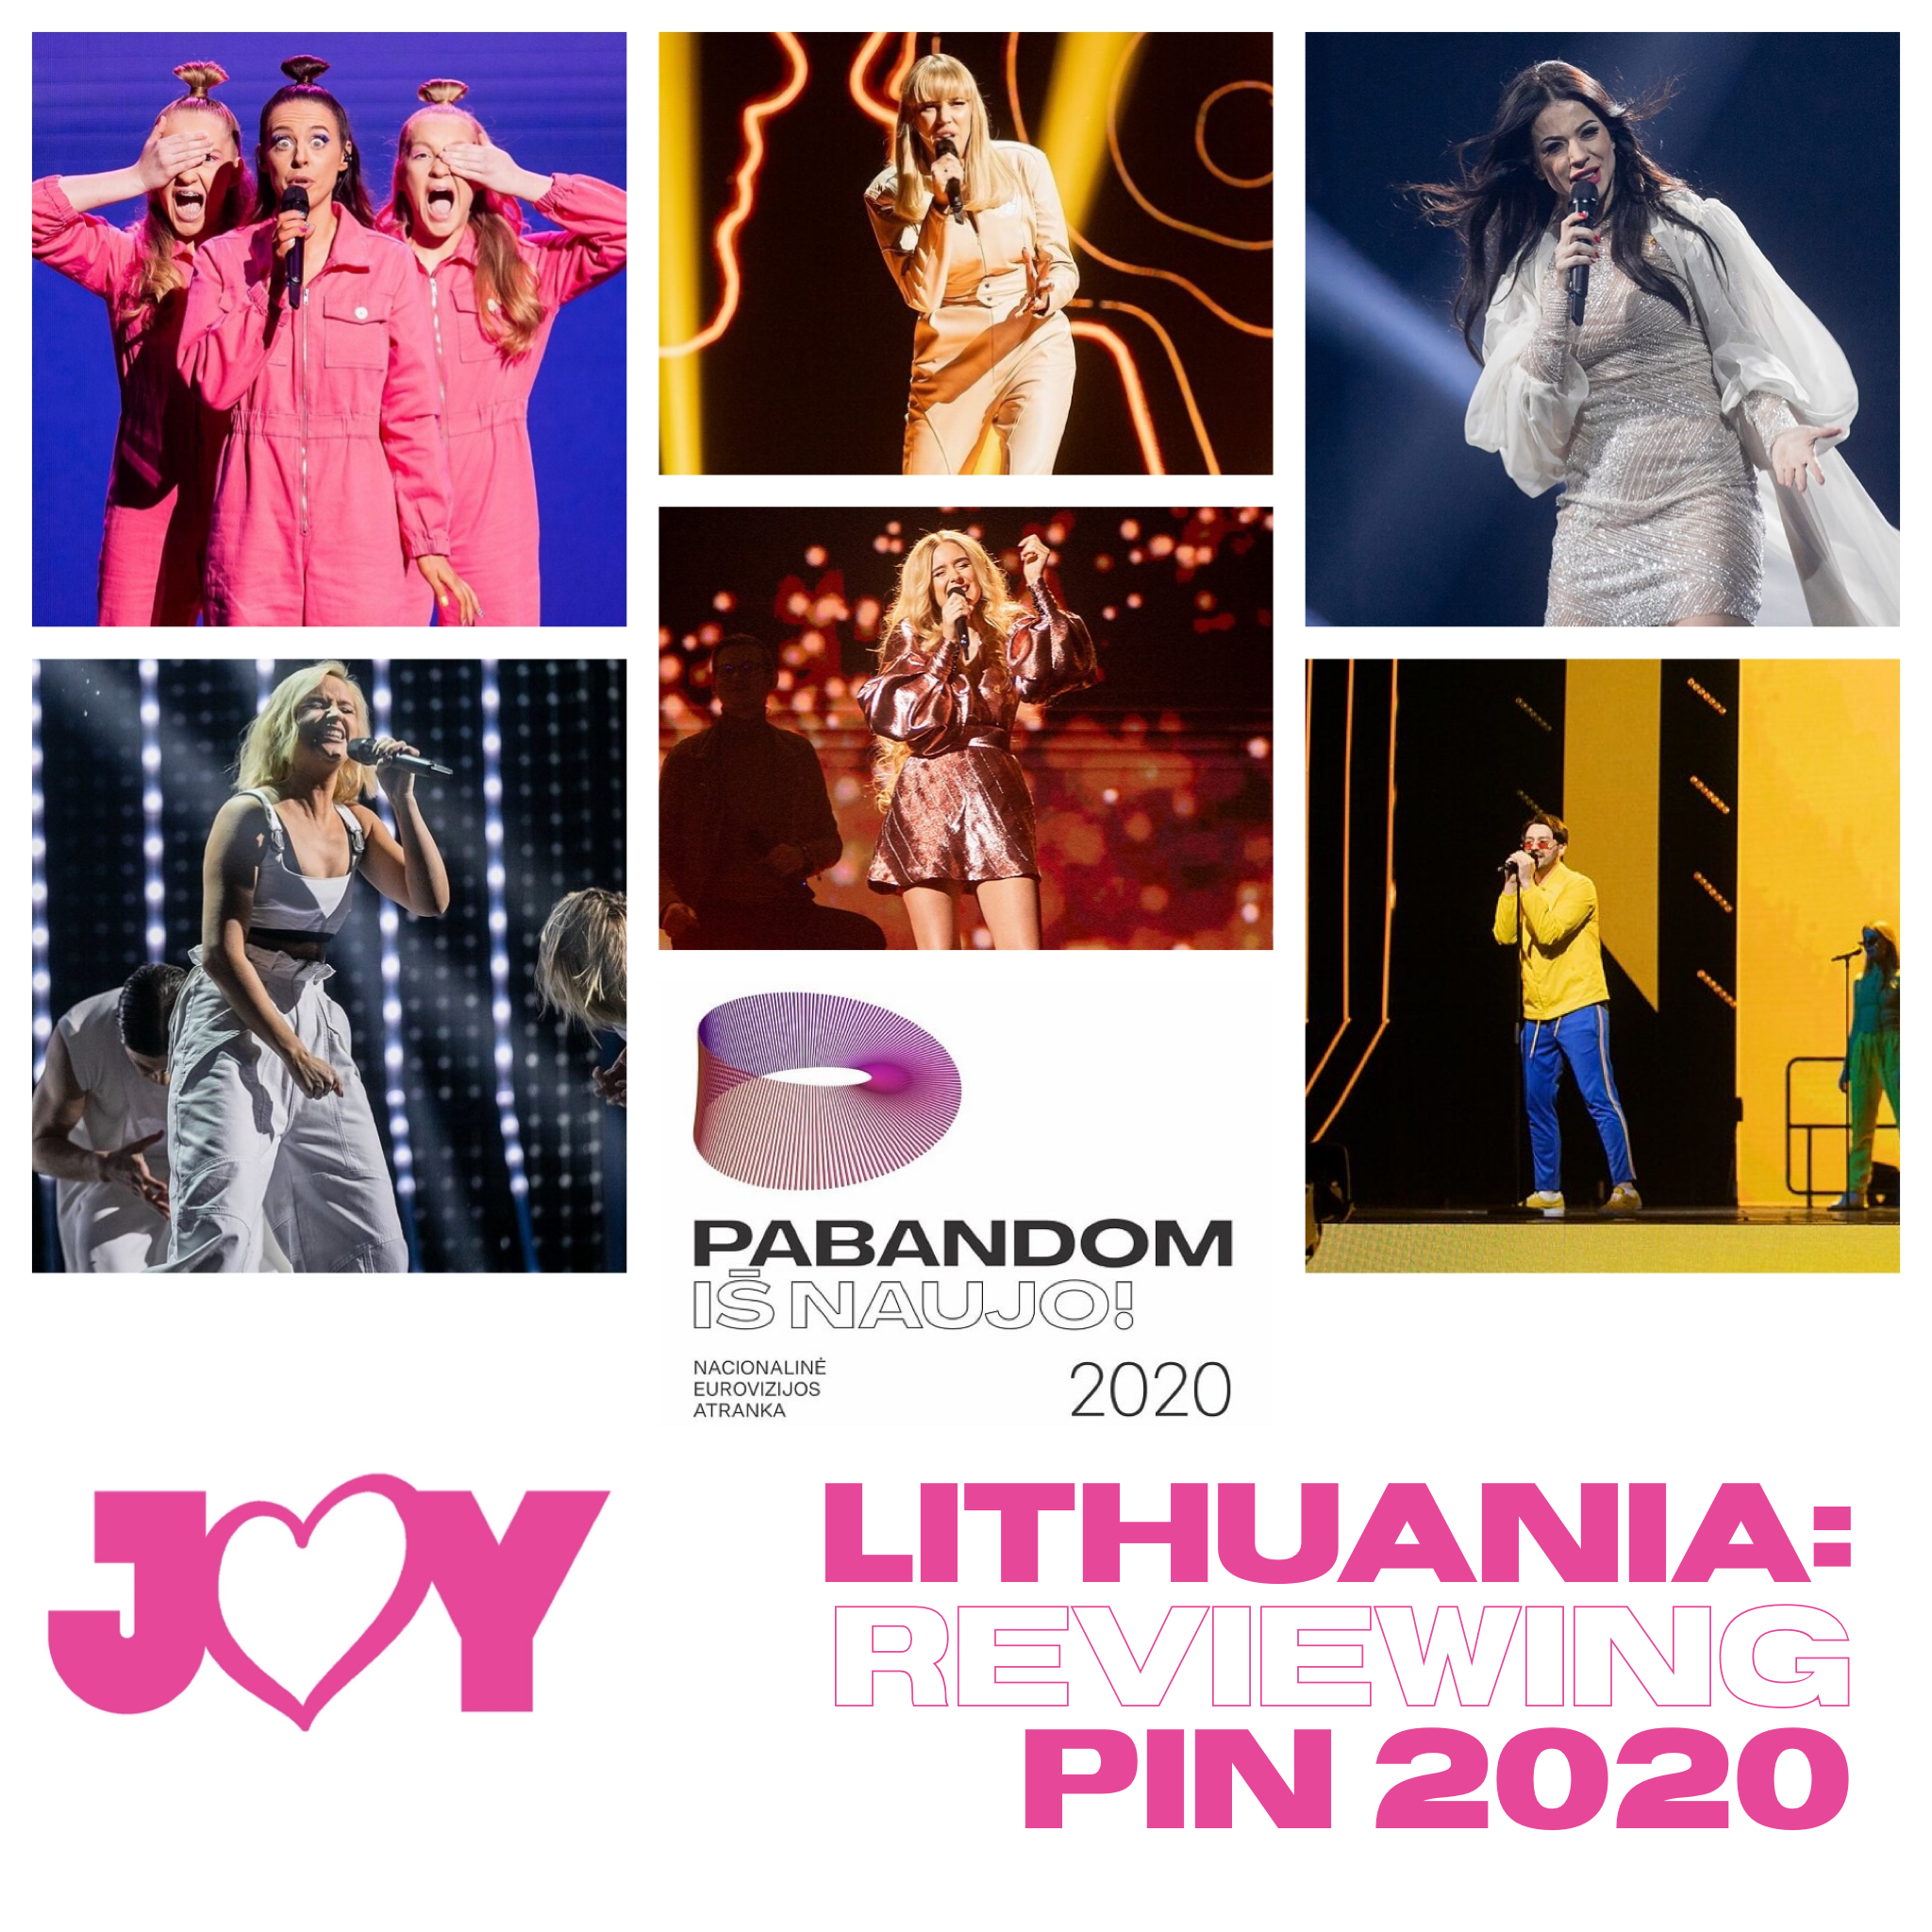 A fiery Lithuanian rerun: Reviewing Pabandom iš Naujo! 2020